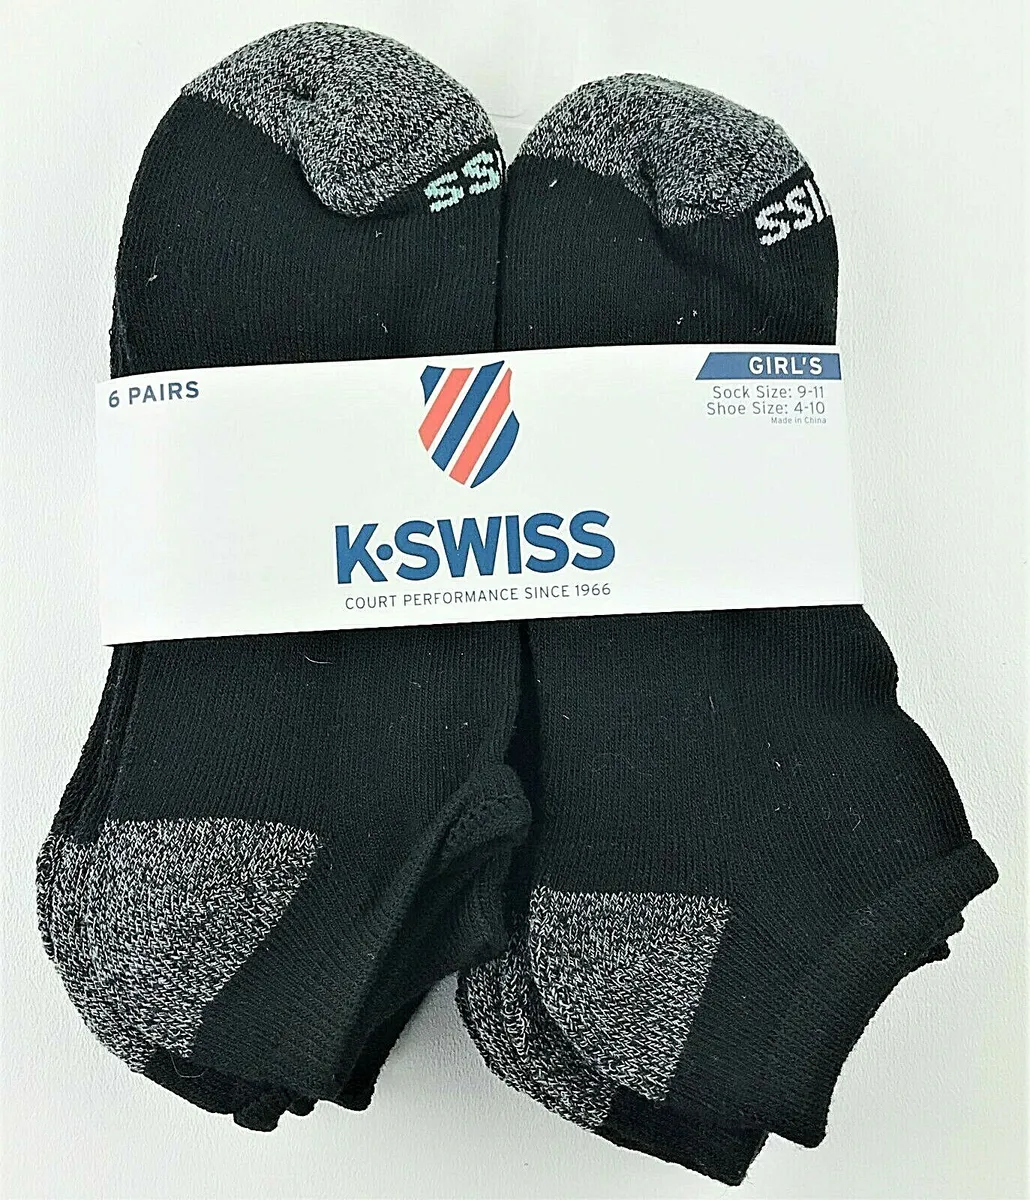 Industrialiseren Drank ontsnapping uit de gevangenis K Swiss Girls 6 Pair Low Cut Socks Black/Grey w Color Size 9-11 Shoe Sz  4-10 | eBay